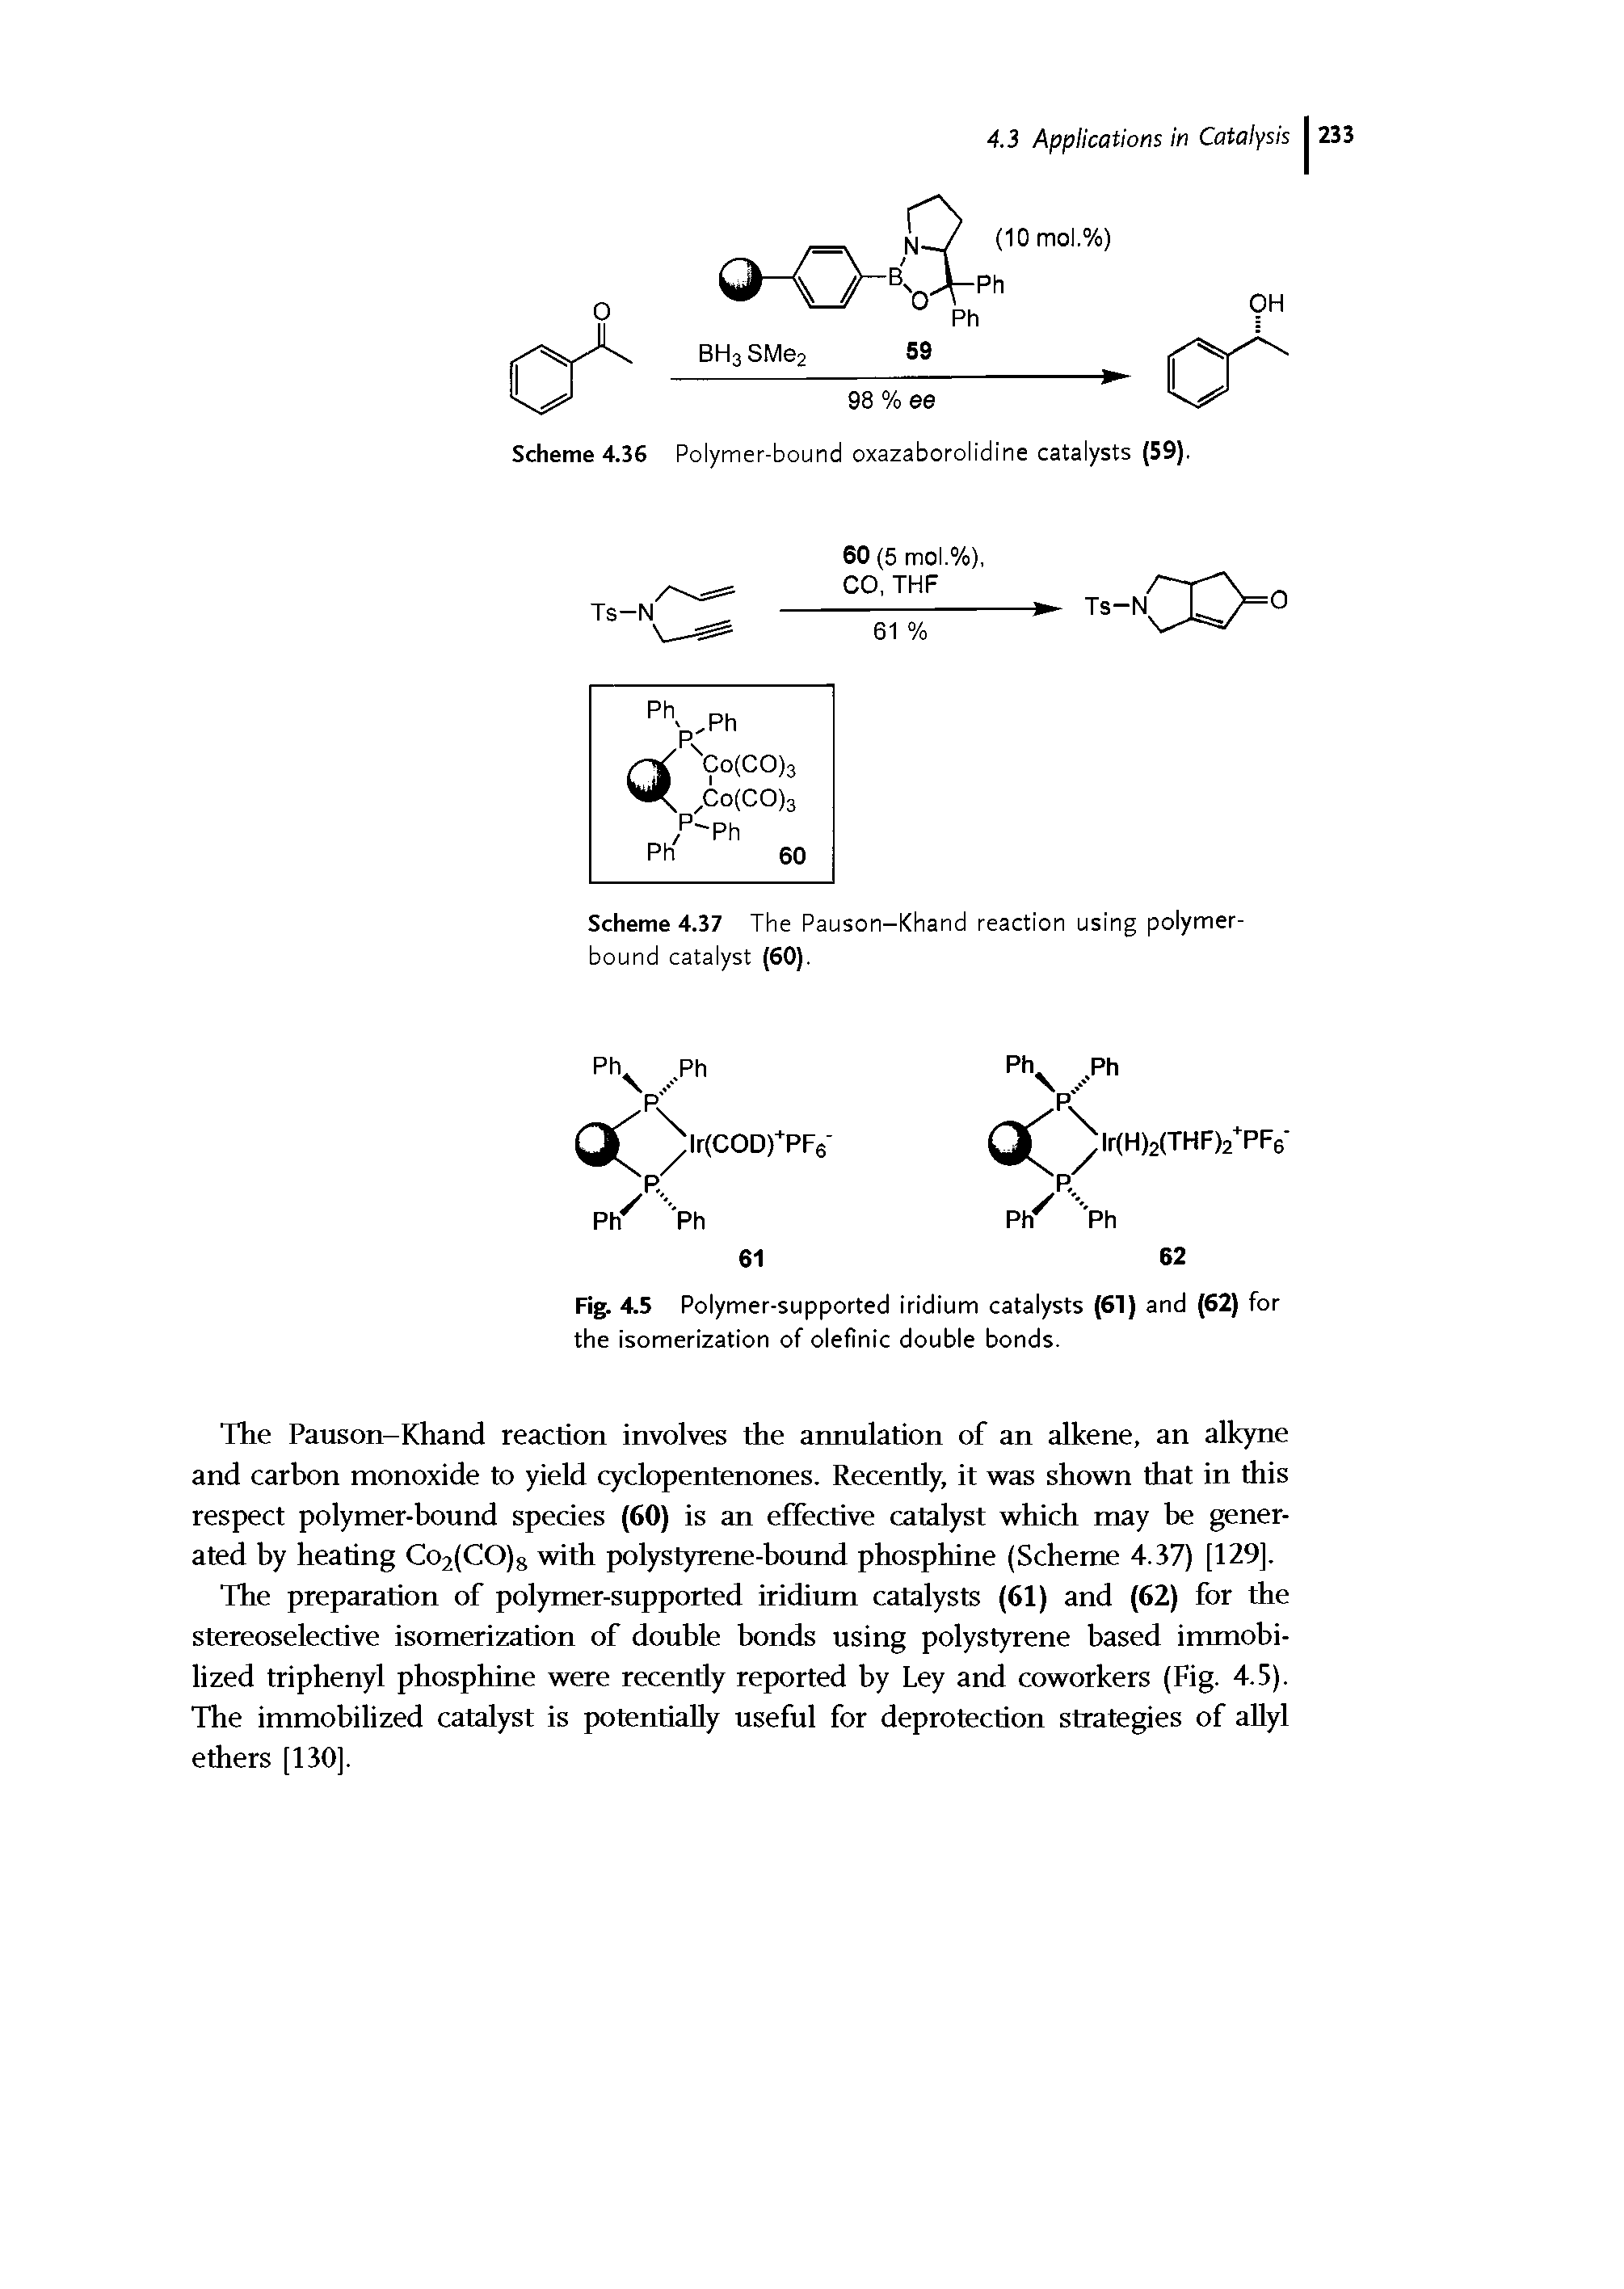 Scheme 4.37 The Pauson-Khand reaction using polymer-bound catalyst (60).